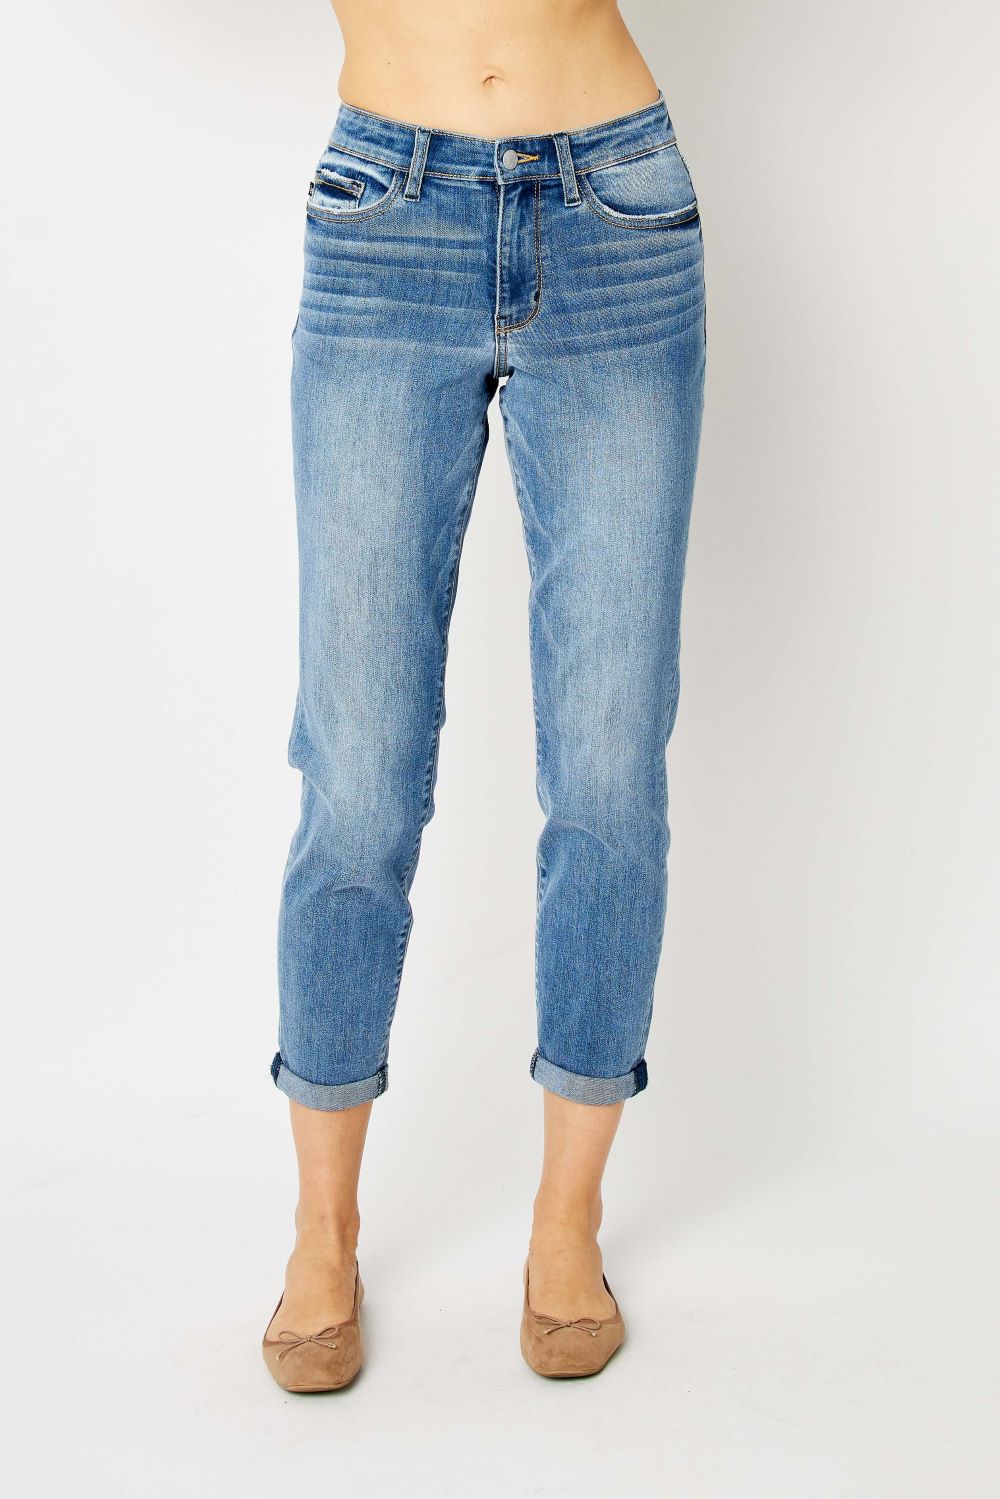 'Judy Blue' Women's Midrise Slim Fit Cuffed Jeans - Medium Blue Wash (Ext. Sizes)